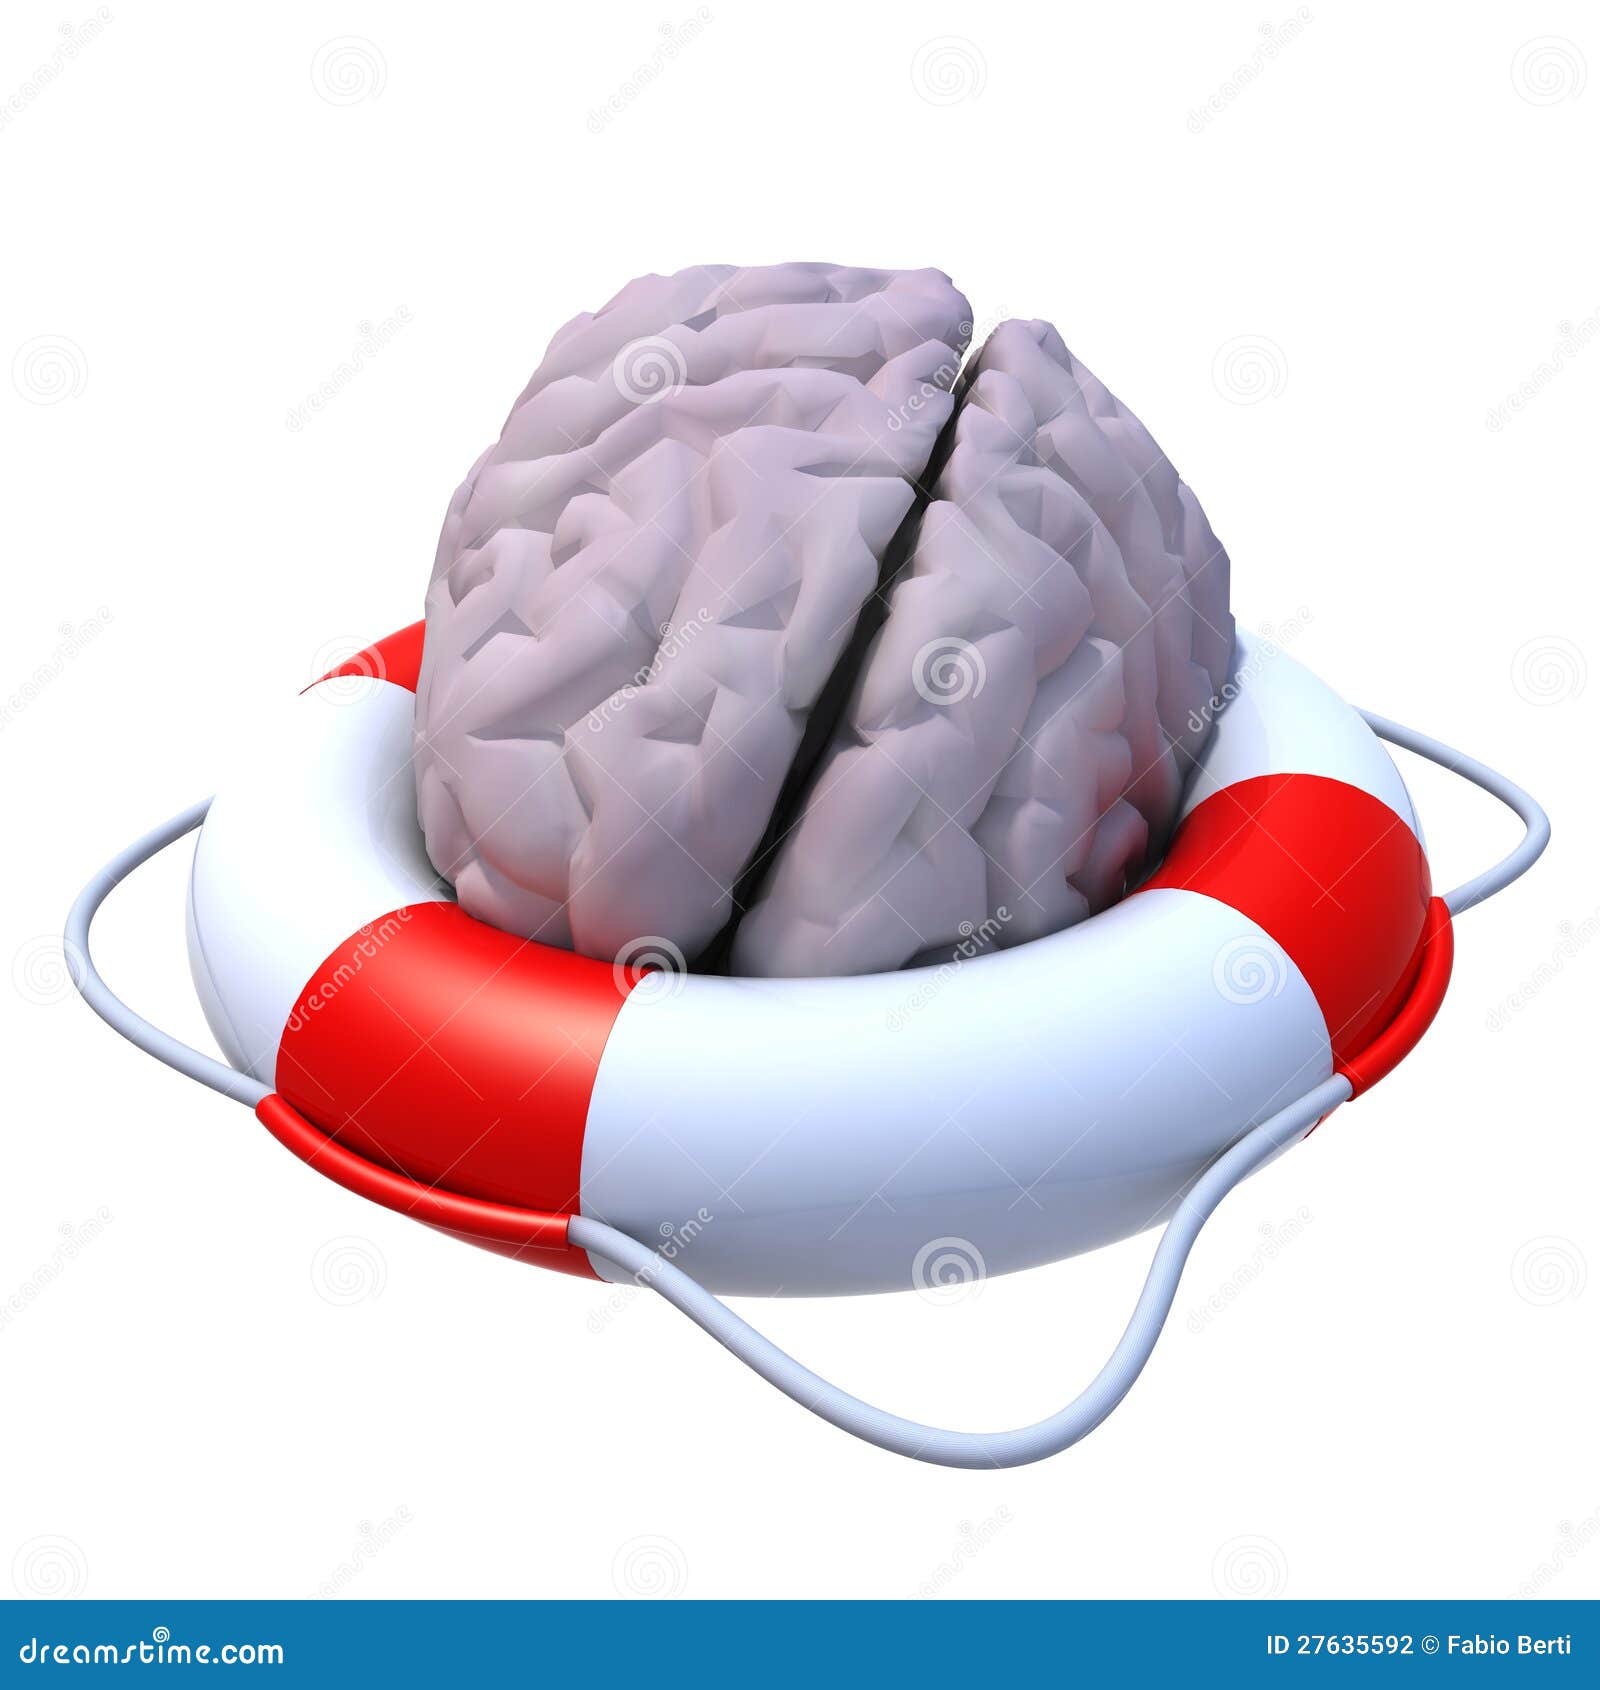 brain in a lifesaver